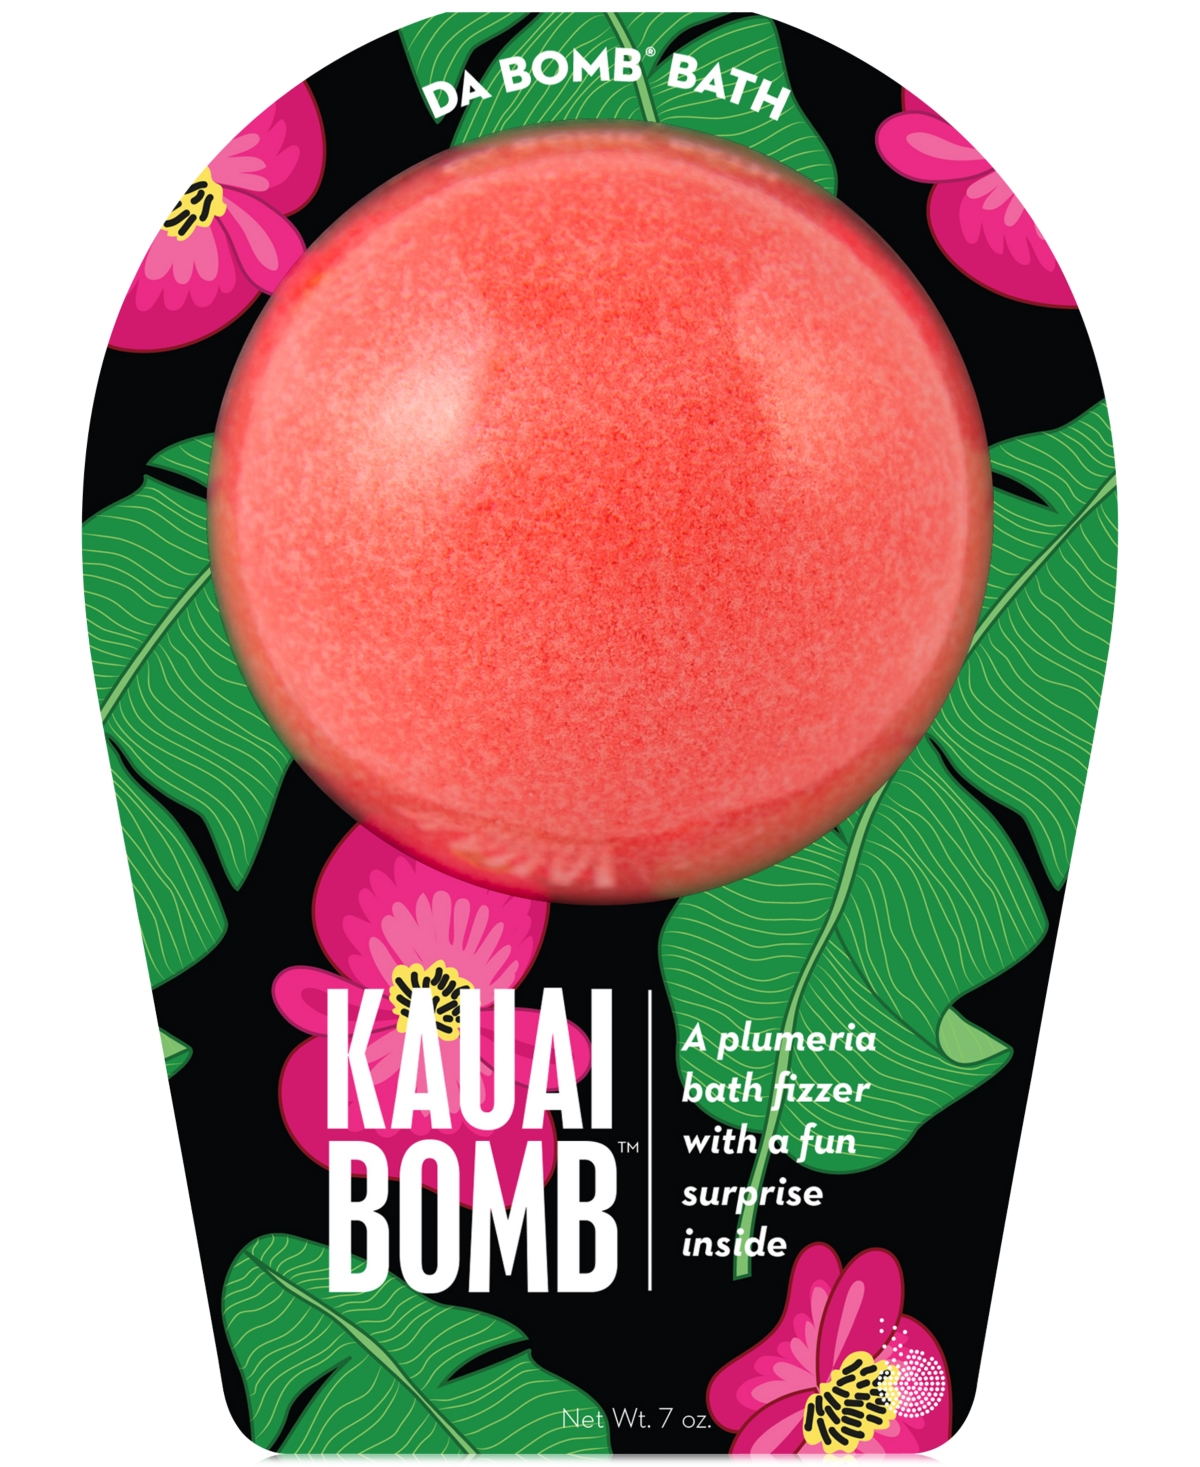 Da Bomb Kauai Bath Bomb, 7 oz.